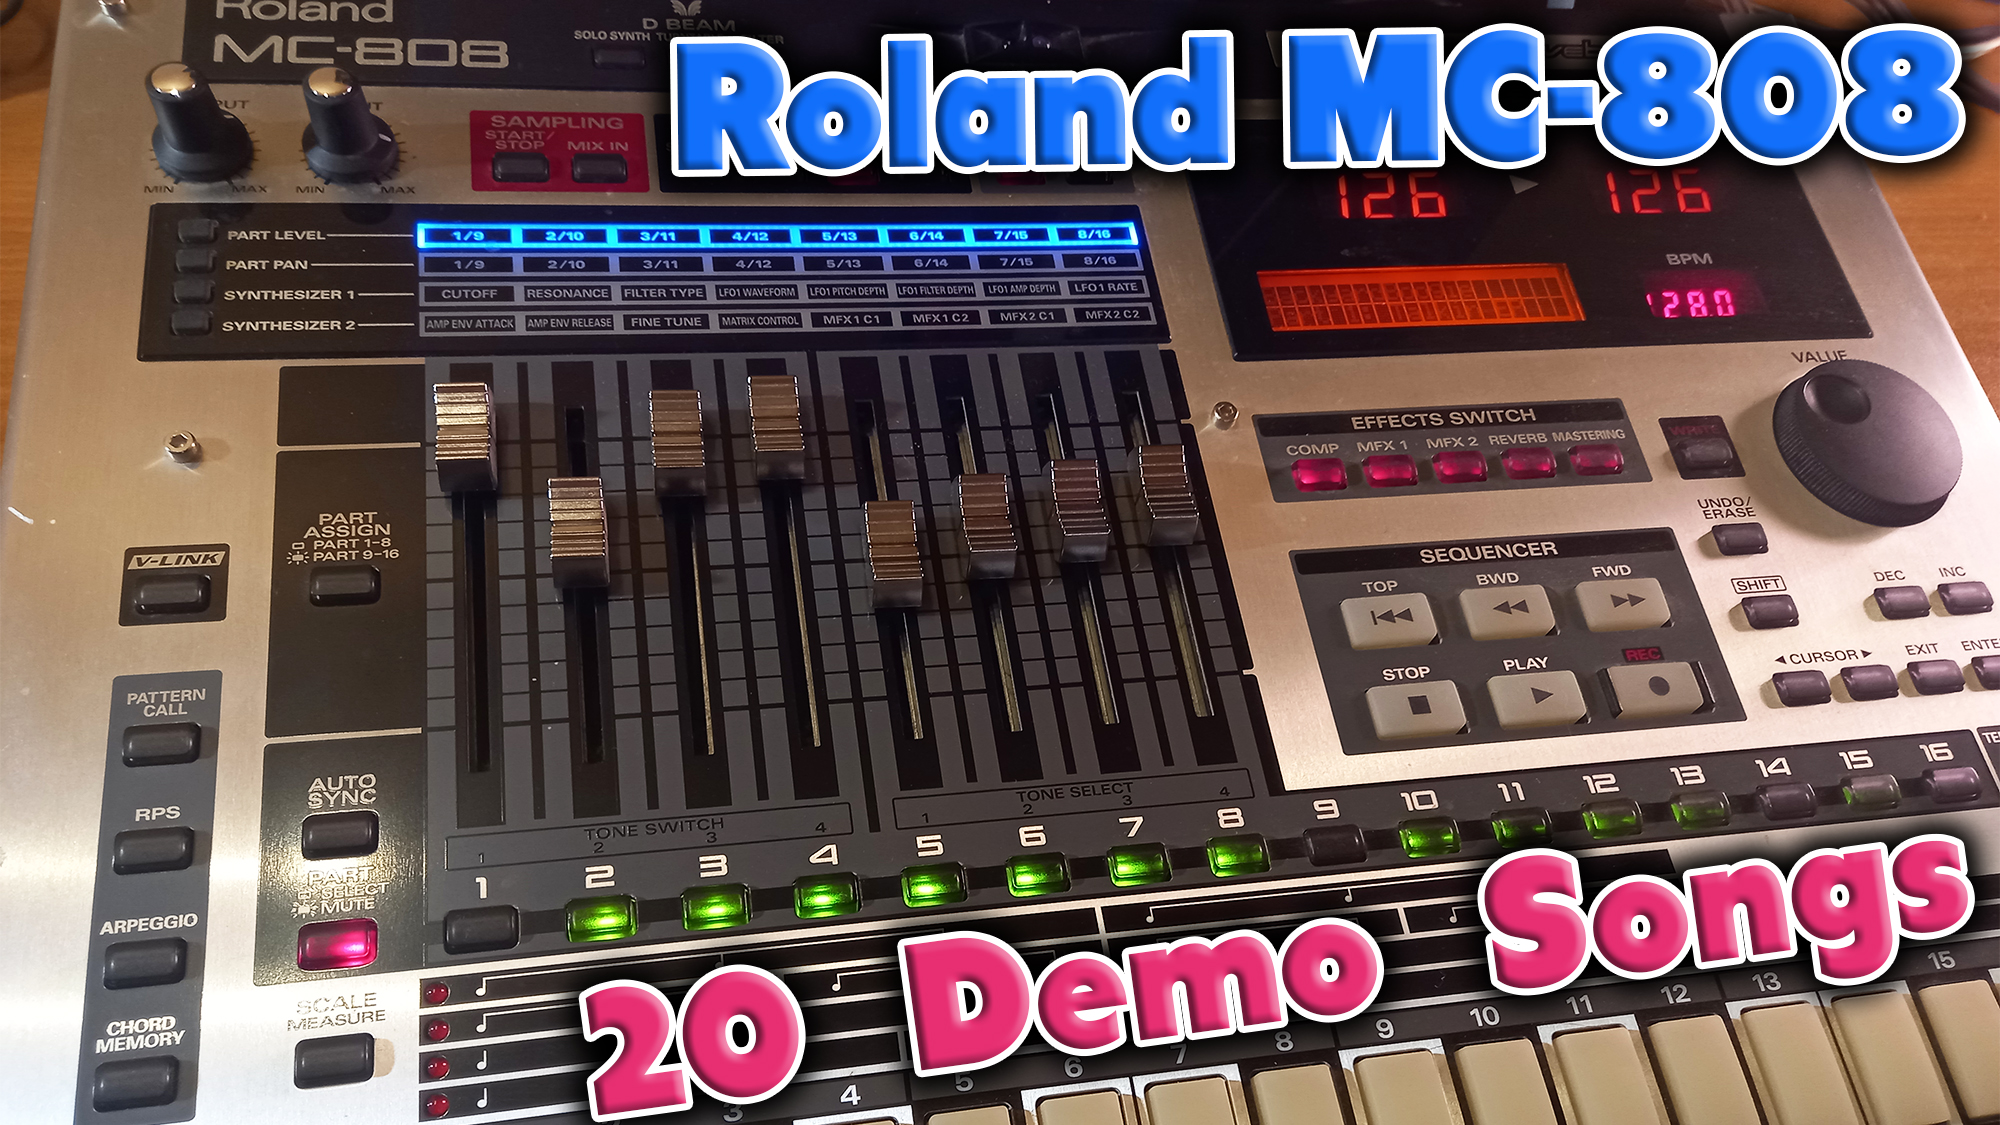 Семплирующий грувбокс 2006 года выпуска - Roland MC 808.  Слушаем 20 Demo songs.